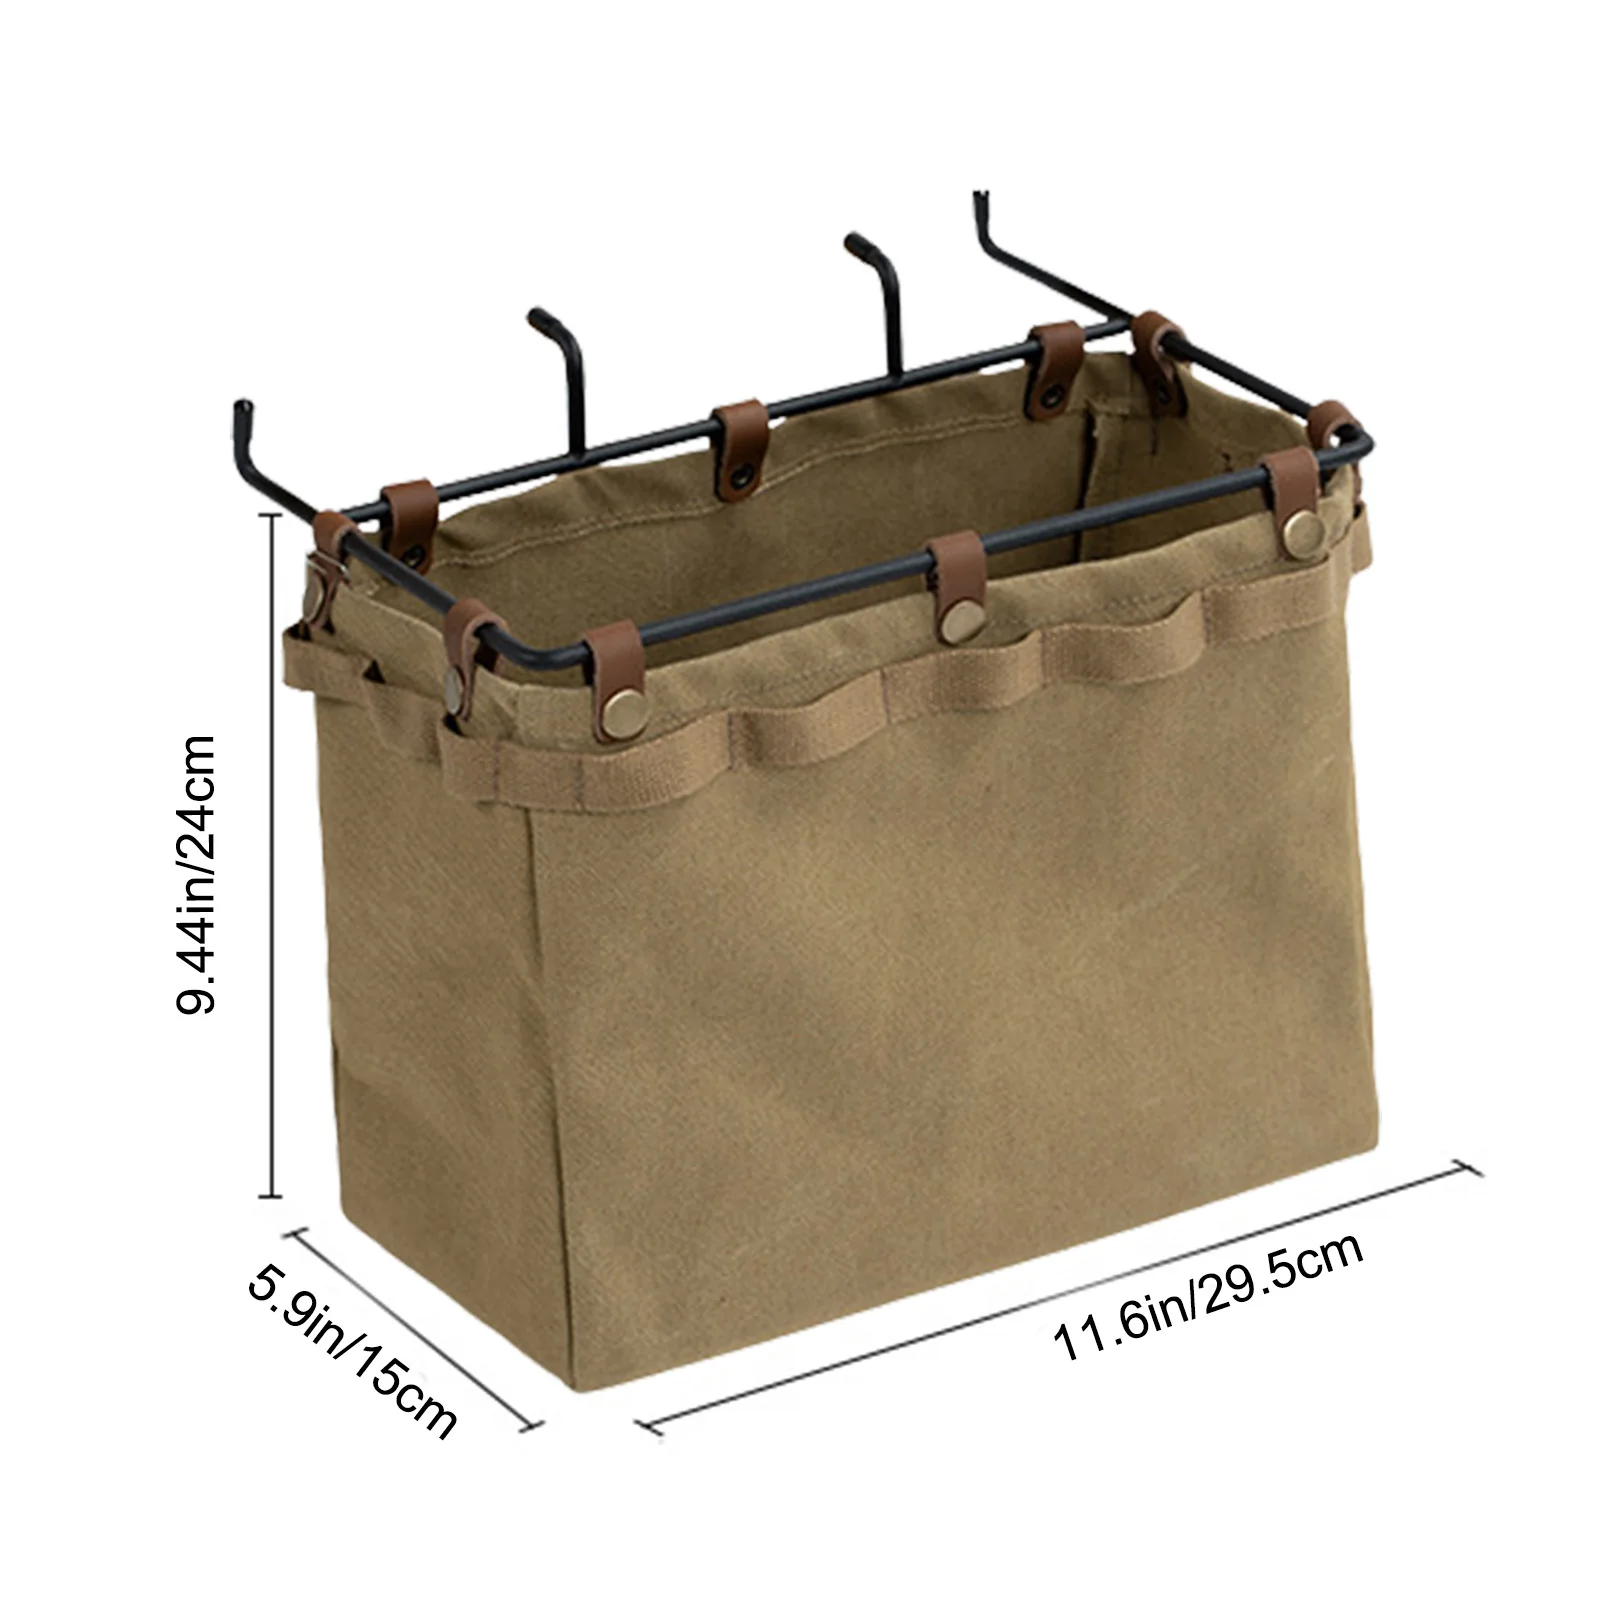 Camping Table Side Hangings Bag Picnic Desk Bag Organizer Deskside Bags Pouch With Slip Pocket Hard PP Board Support Suitable images - 6